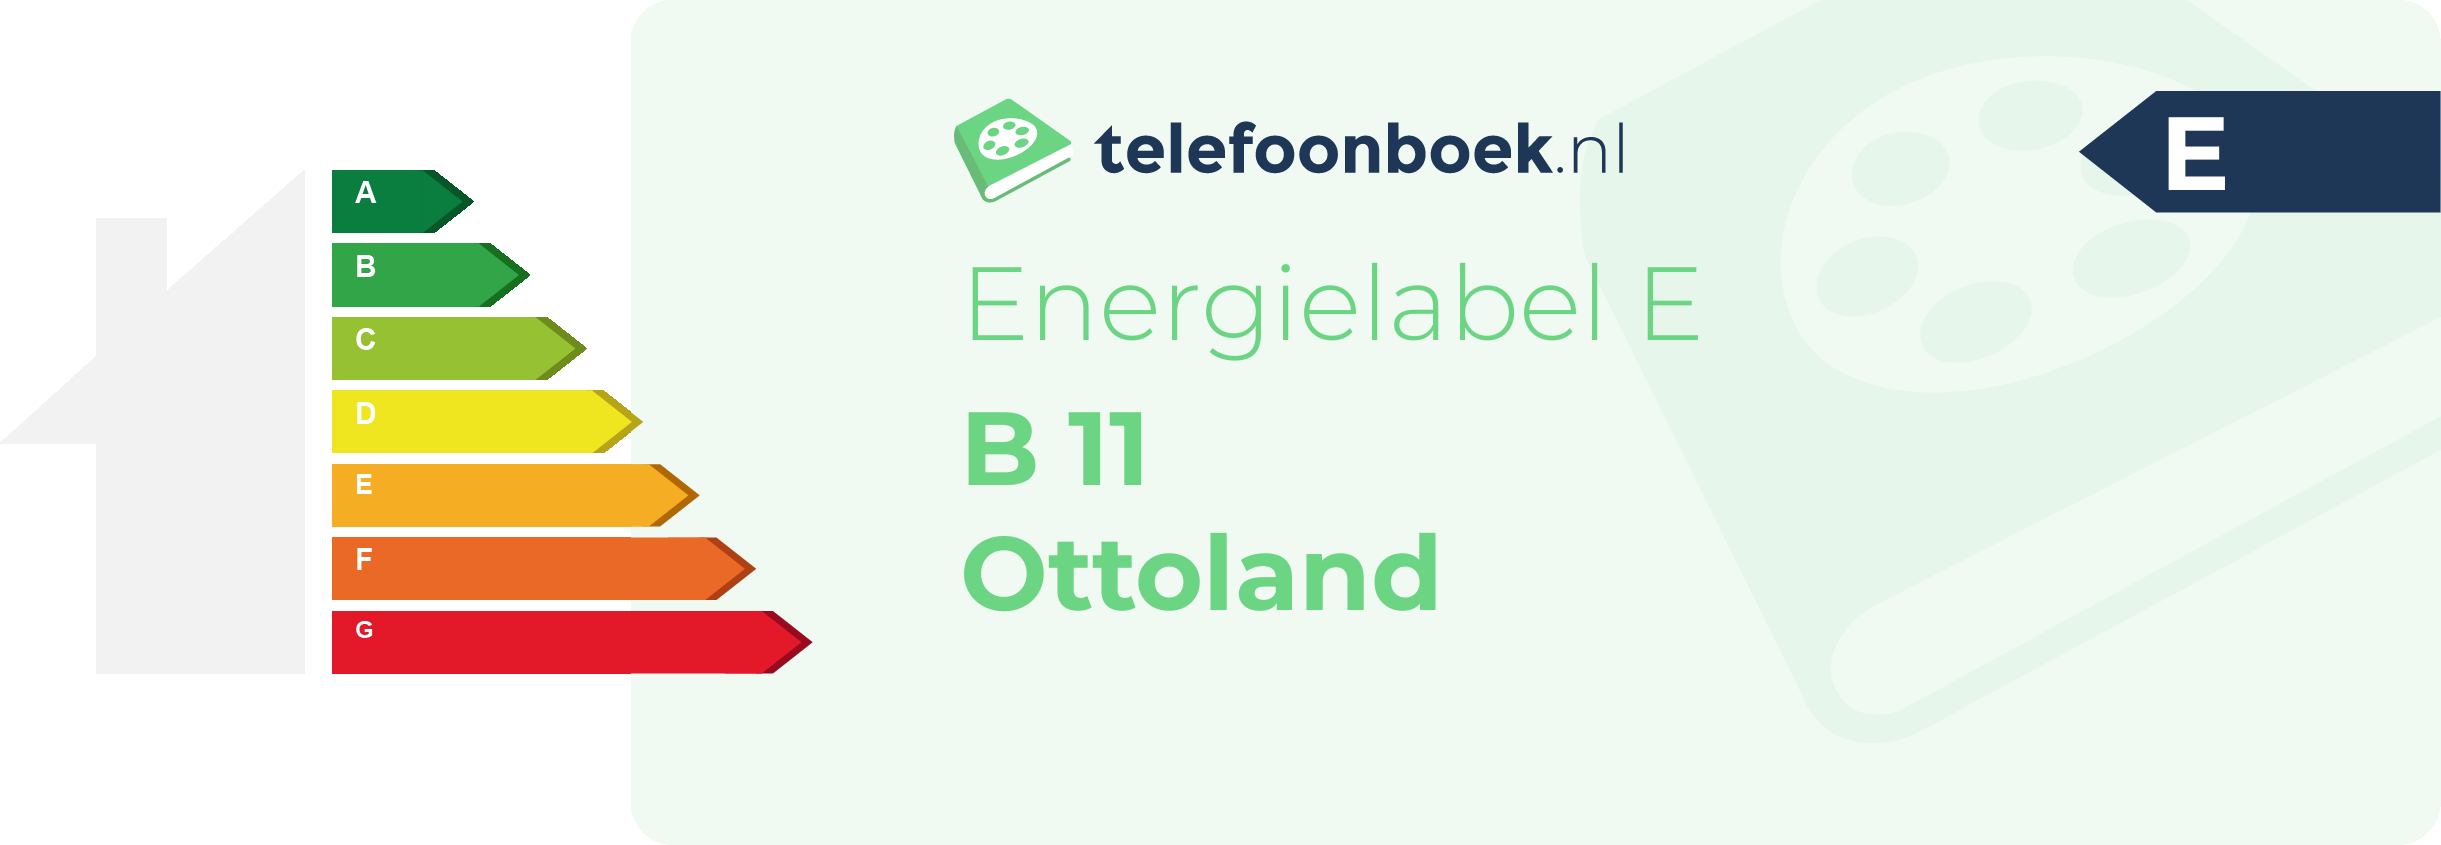 Energielabel B 11 Ottoland